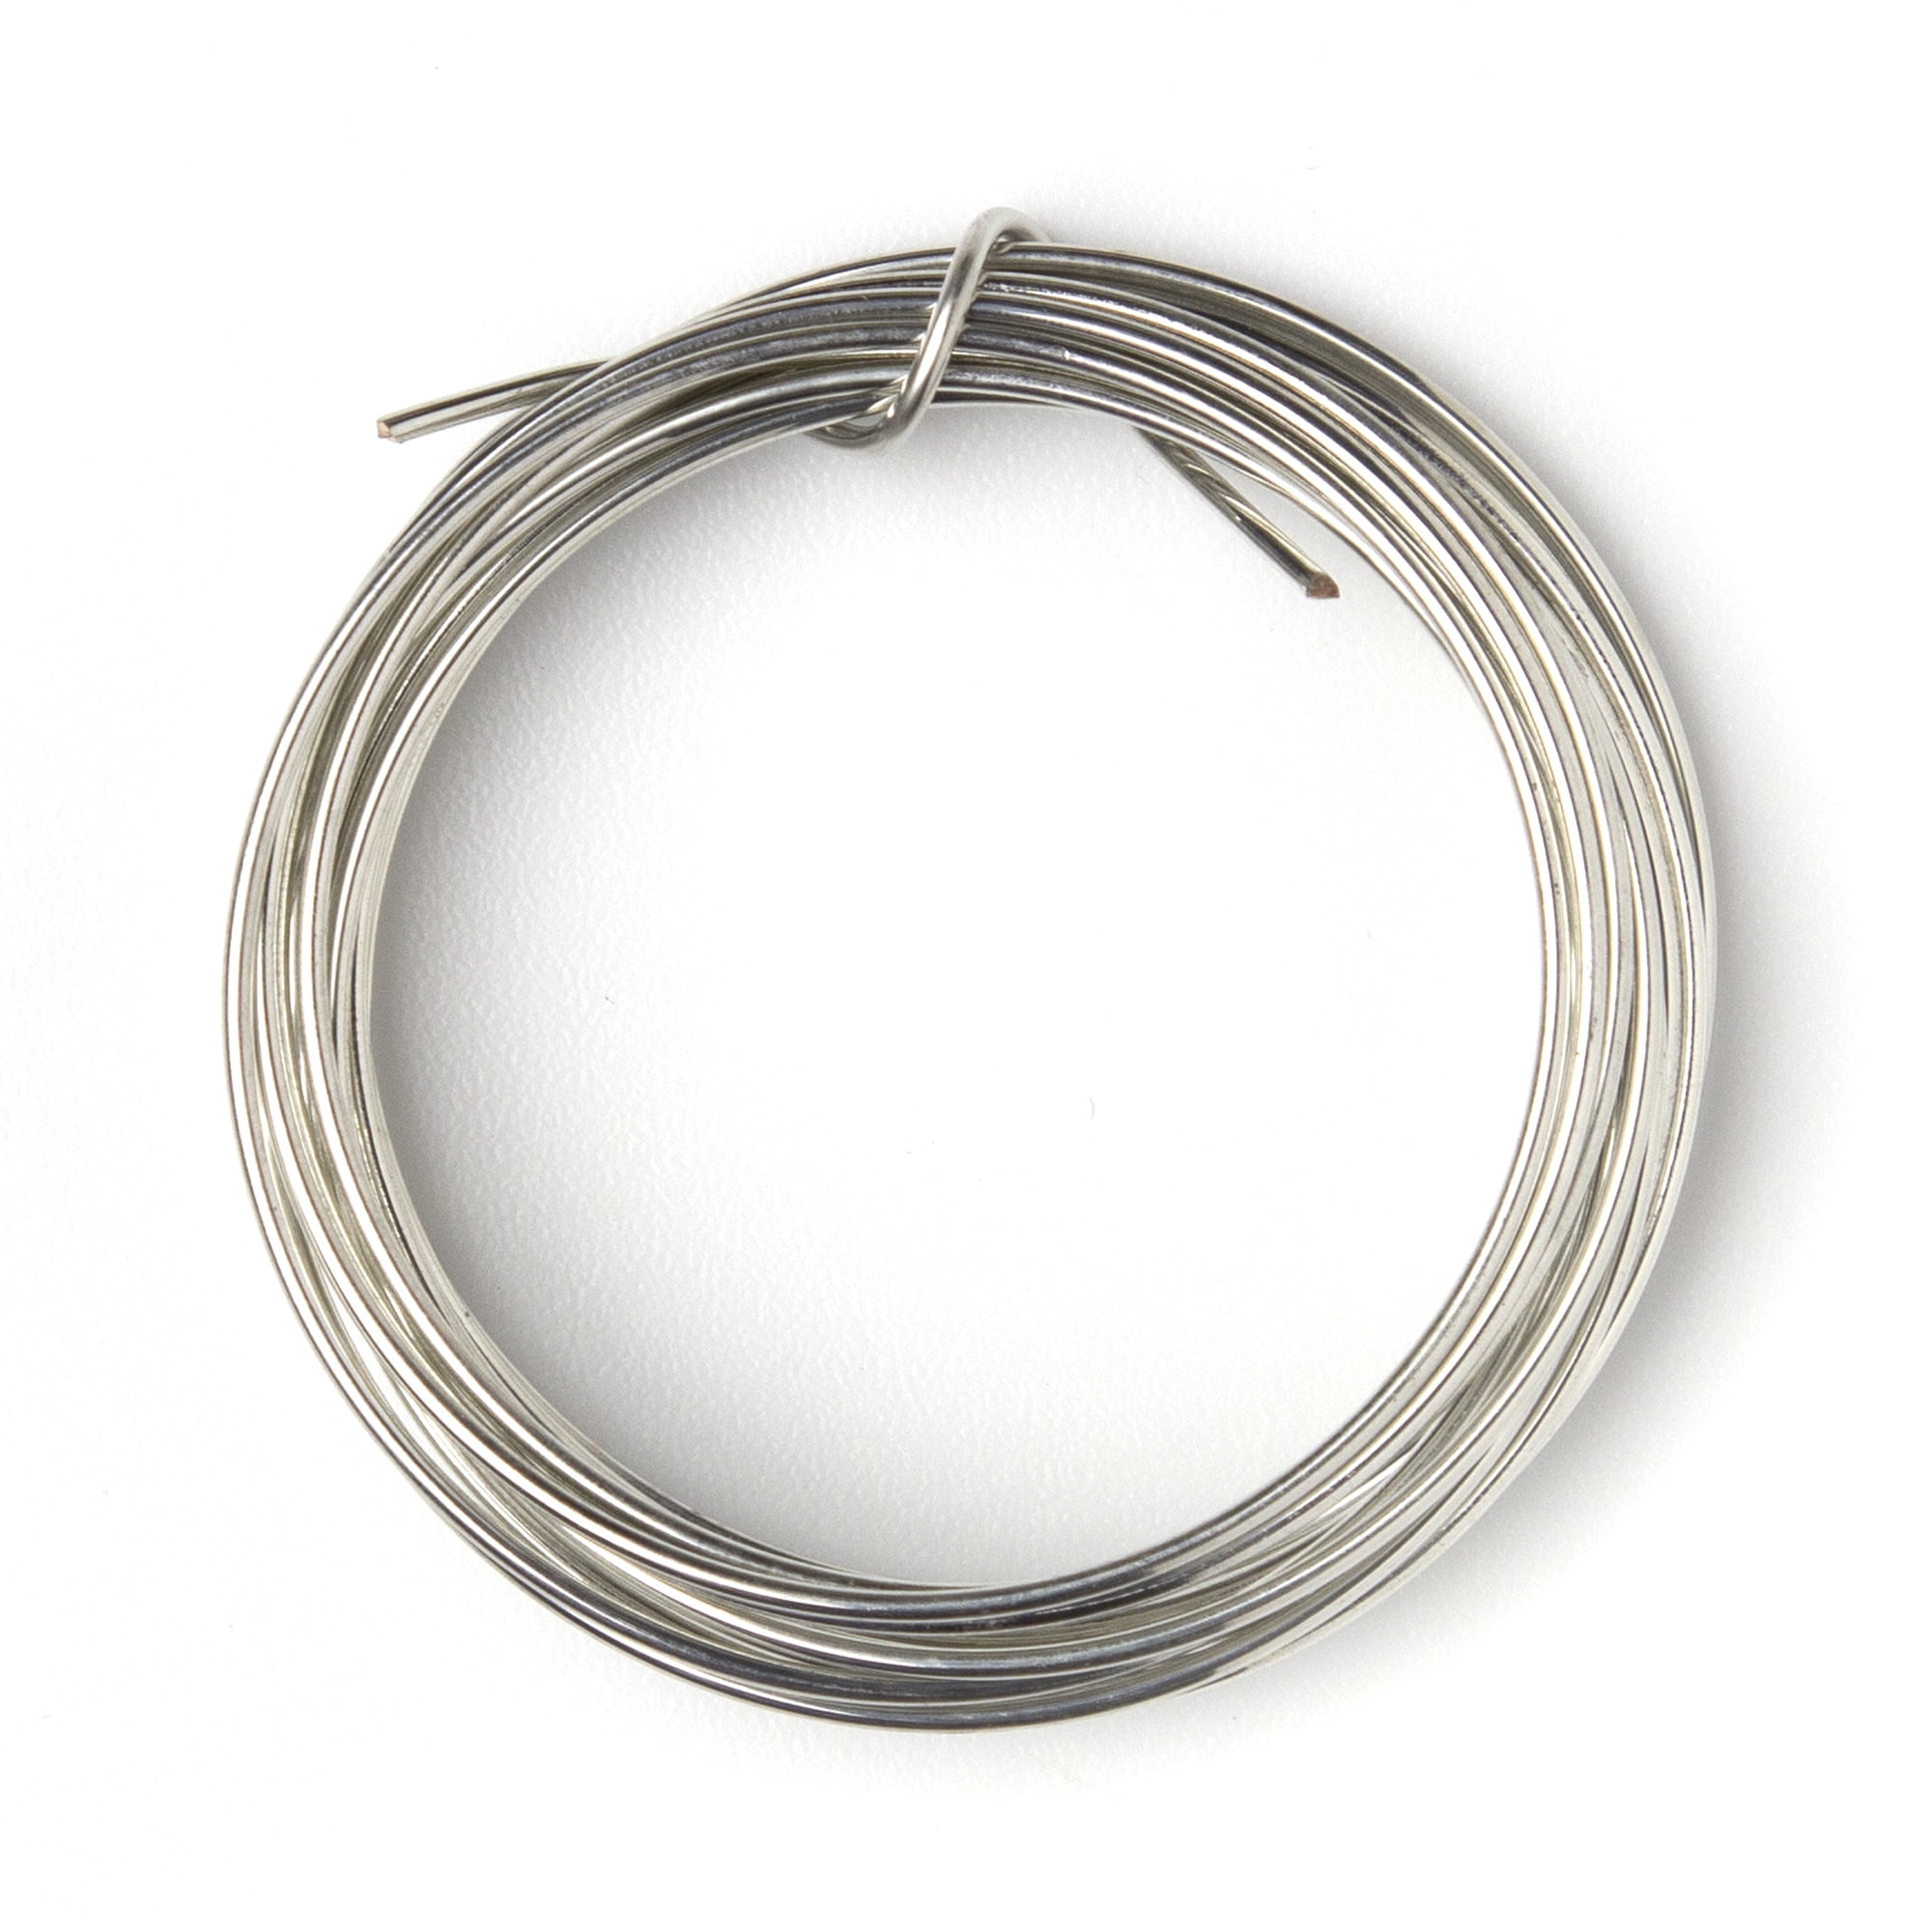 Beadalon 22-Gauge Tarnish Resistant Silver Plate Round Wire, 1/4-Pound